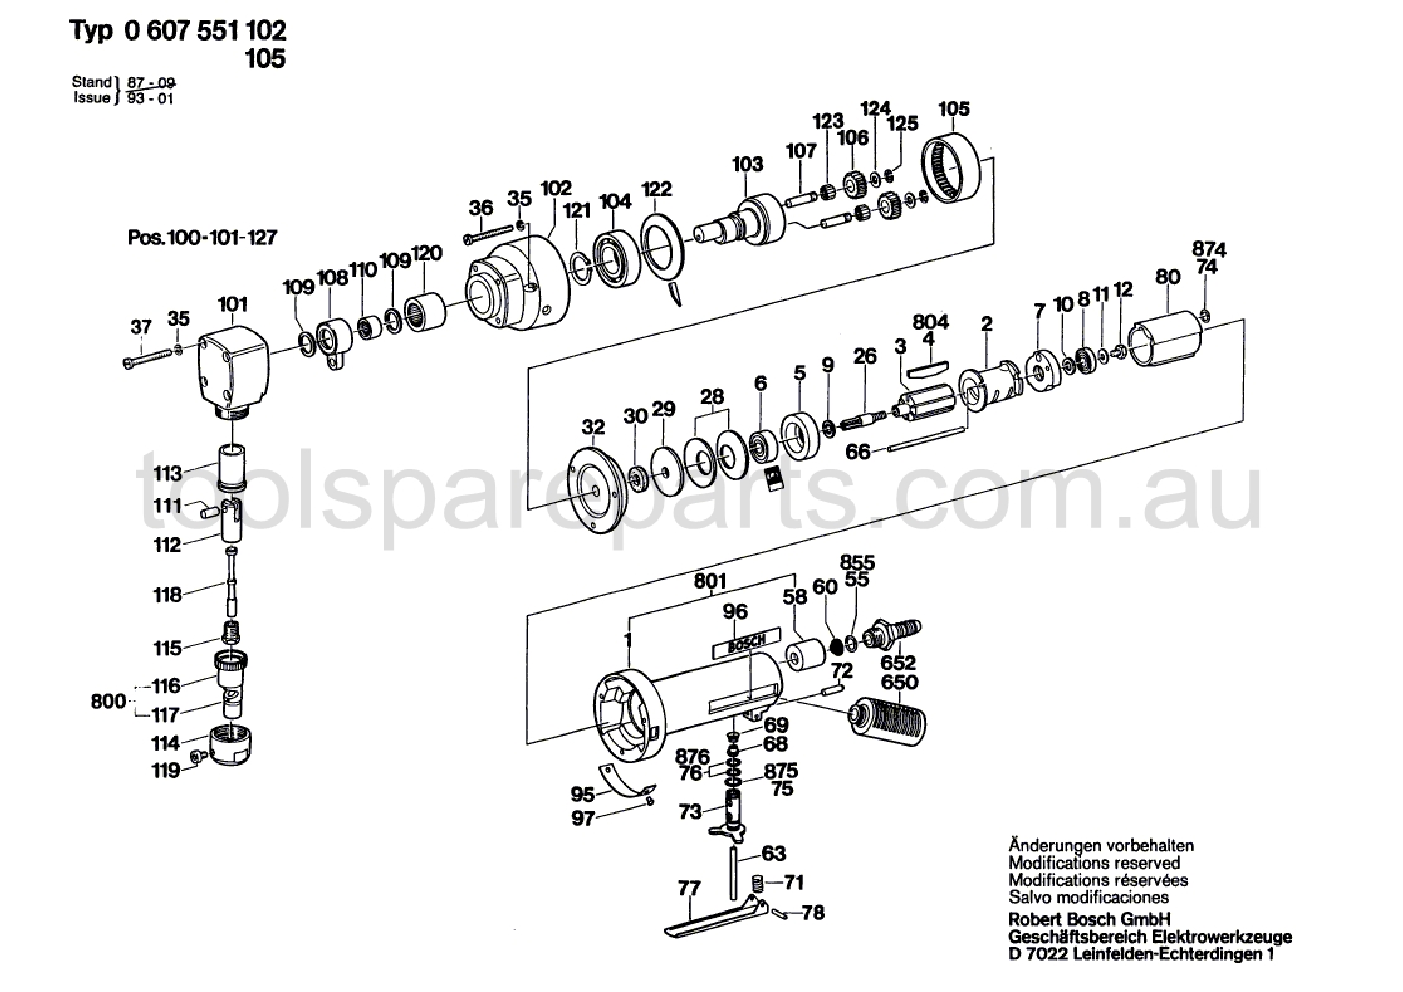 Bosch 370 WATT-SERIE 0607551105  Diagram 1